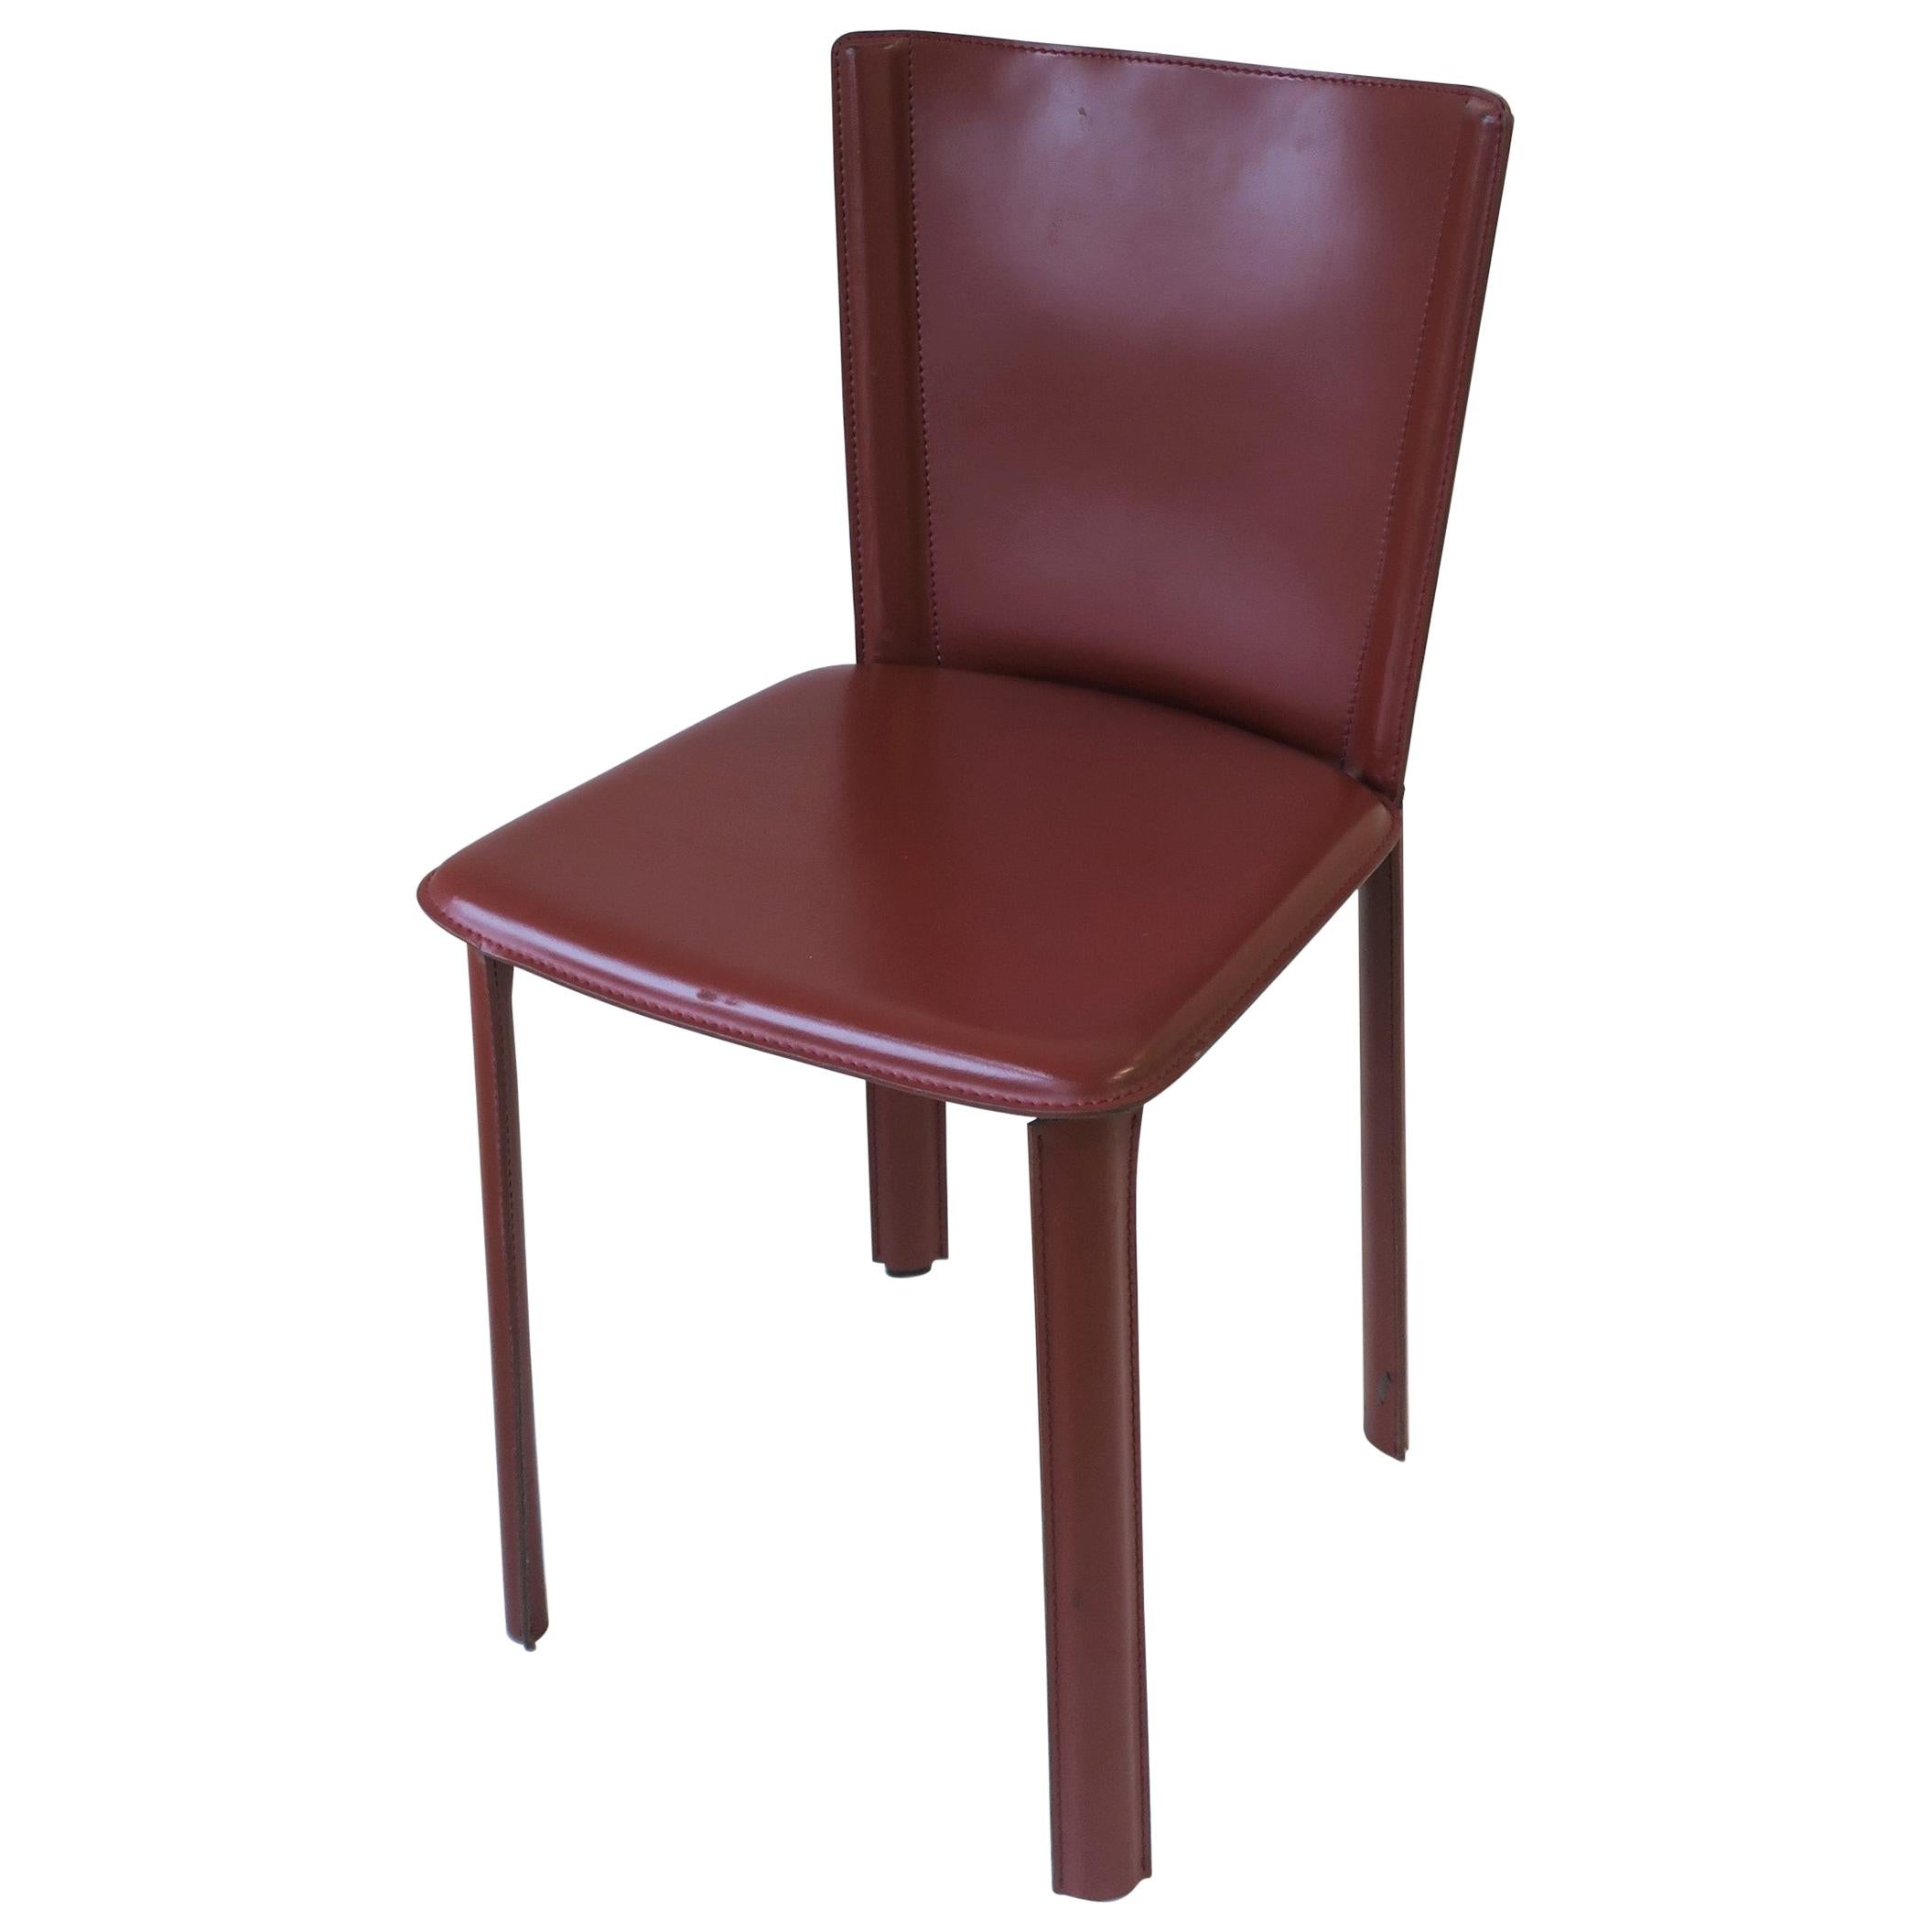 Designer Italian Red Burgundy Leather Side or Desk Chair by Frag